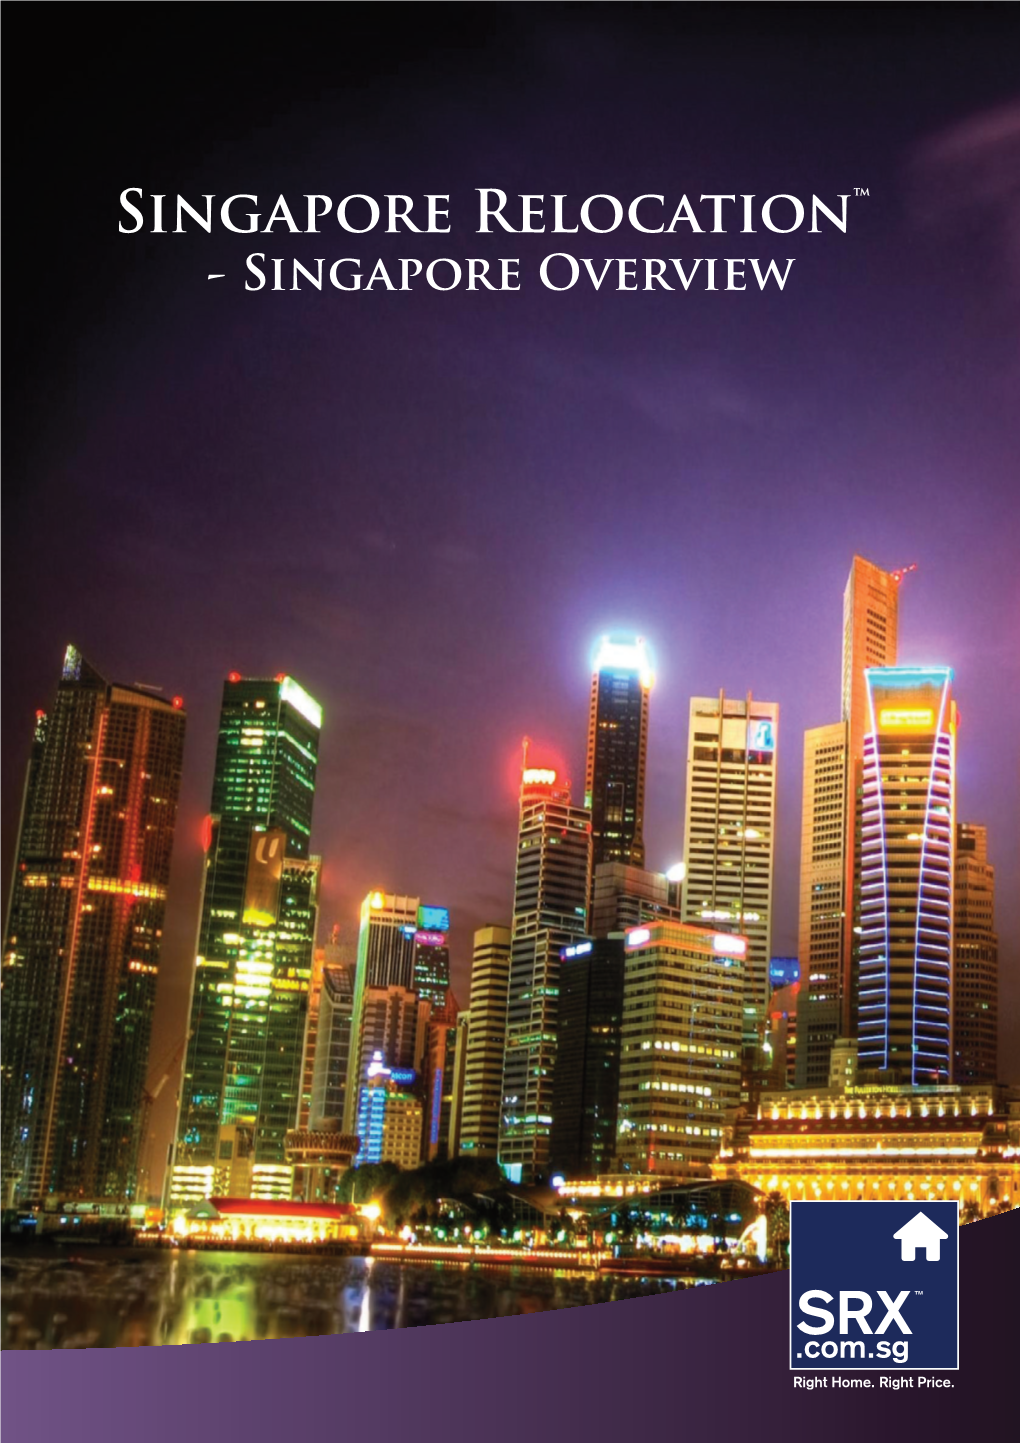 Singapore Relocation™ - Singapore Overview